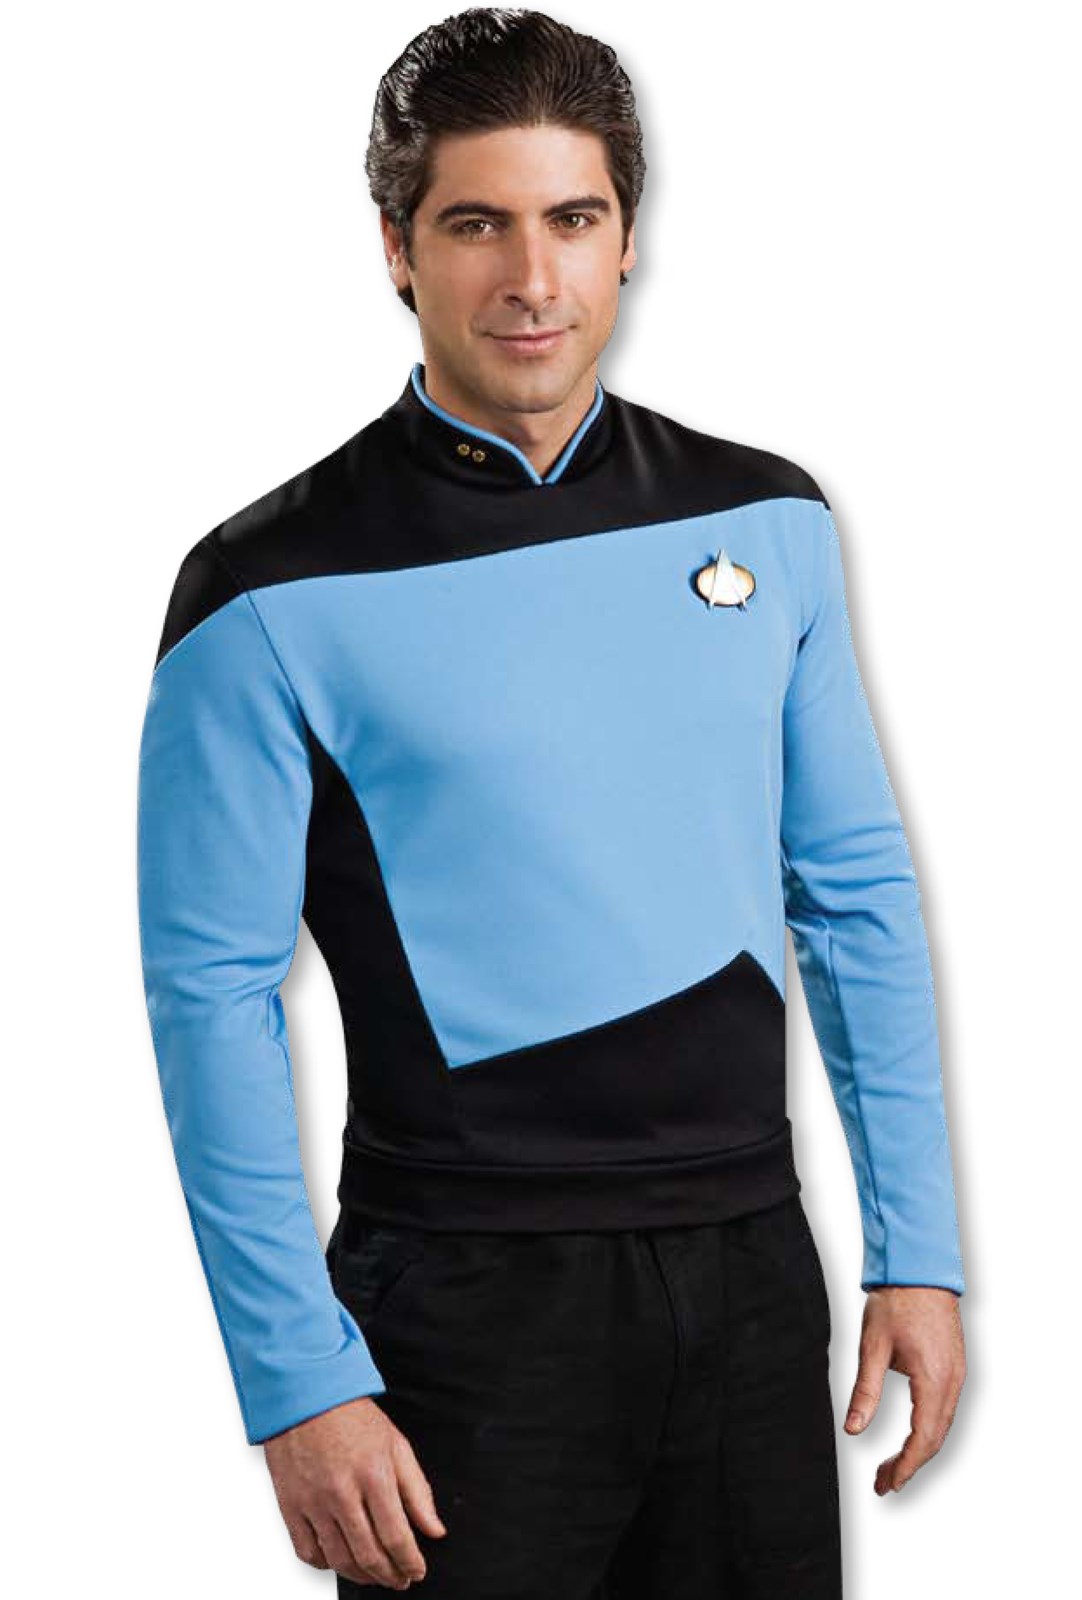 Star Trek Next Generation Blue Shirt Deluxe Adult Costume